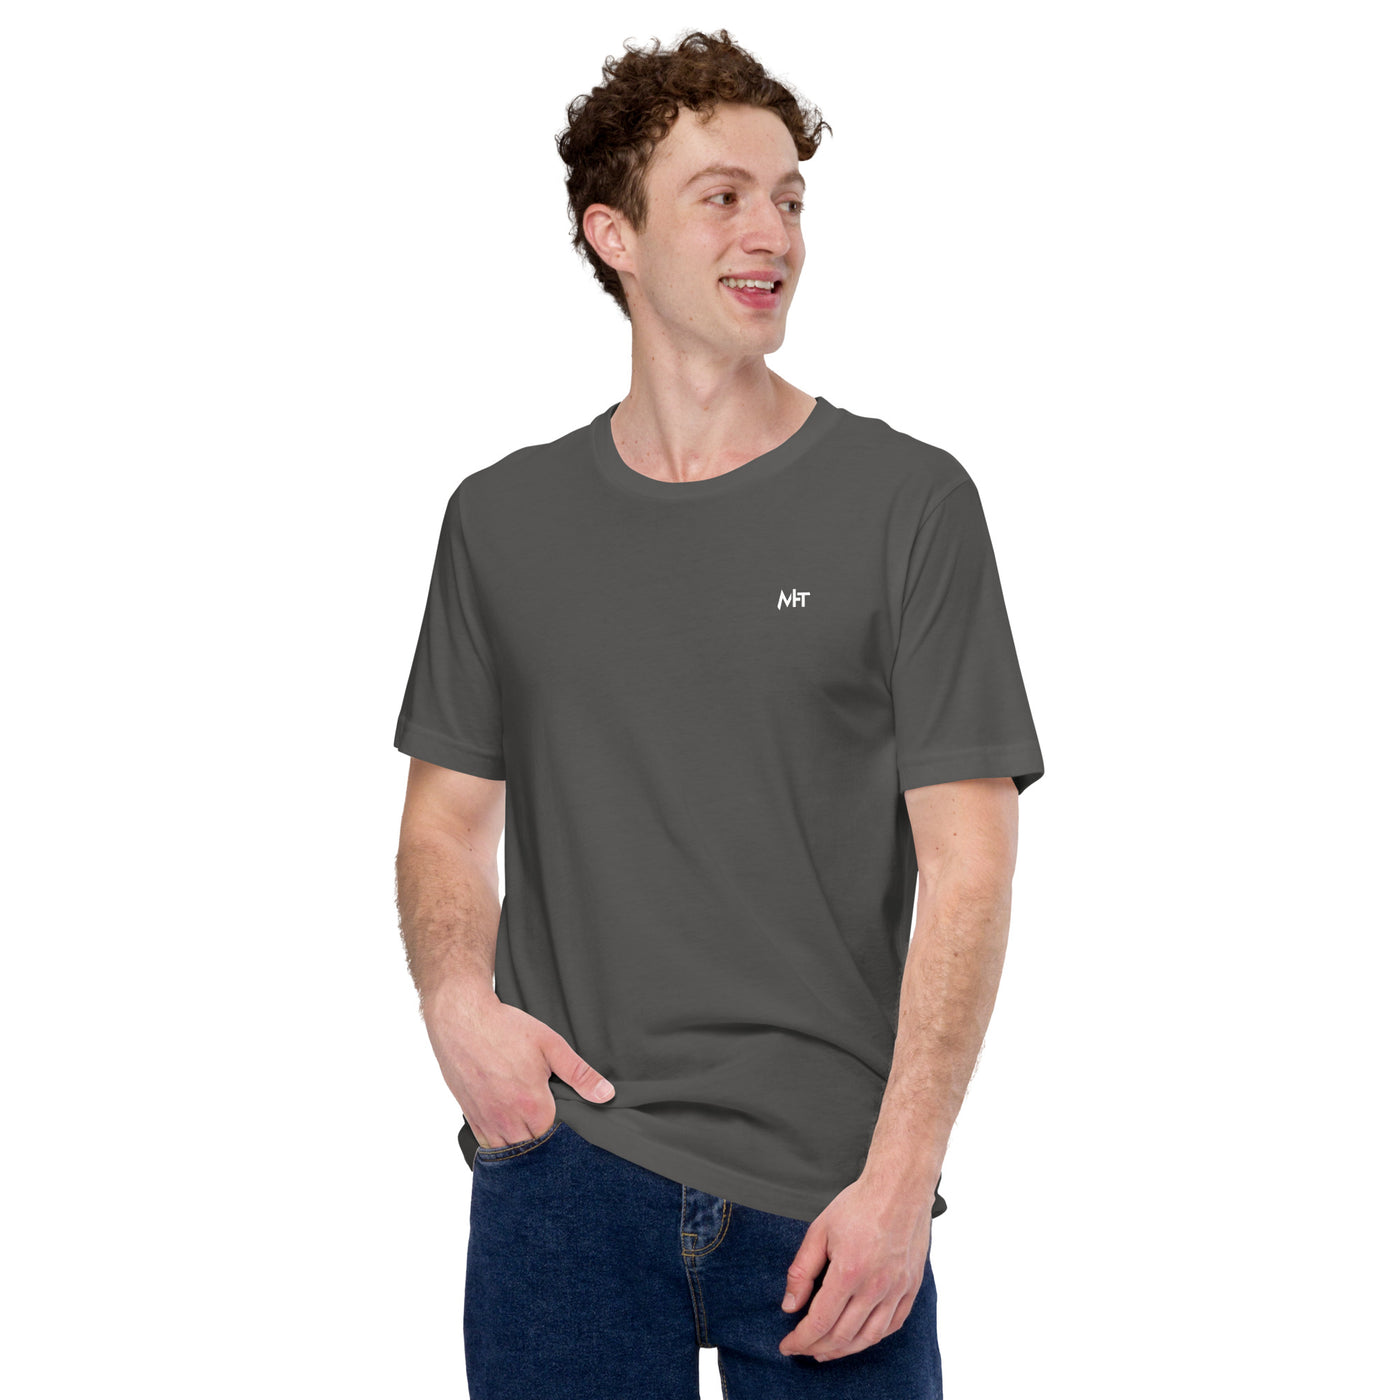 Crypto is My Jam - Unisex t-shirt ( Back Print )